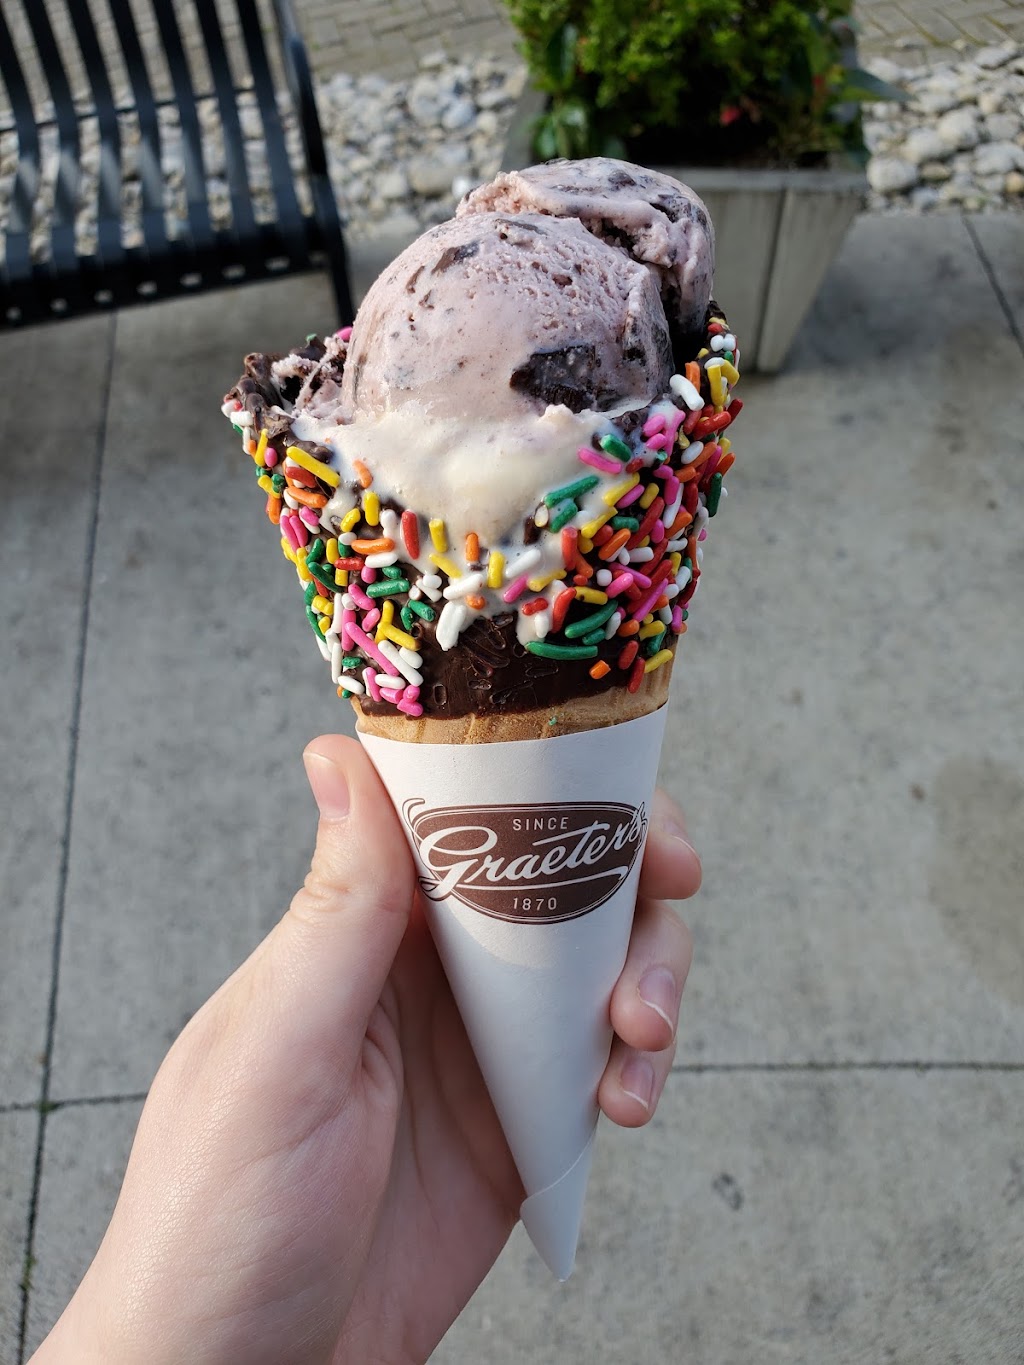 Graeters Ice Cream | 110 S 2nd St, Loveland, OH 45140 | Phone: (513) 583-0797